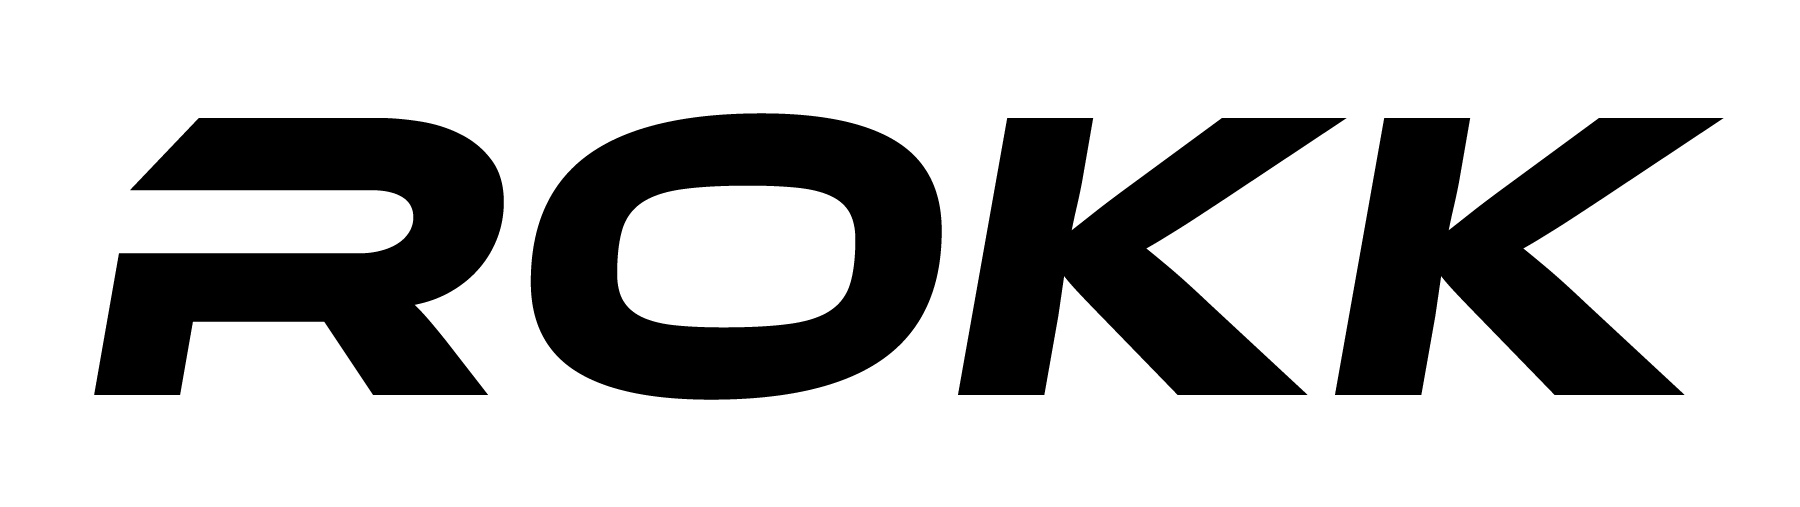 Frenchie's Drains, LLP Logo